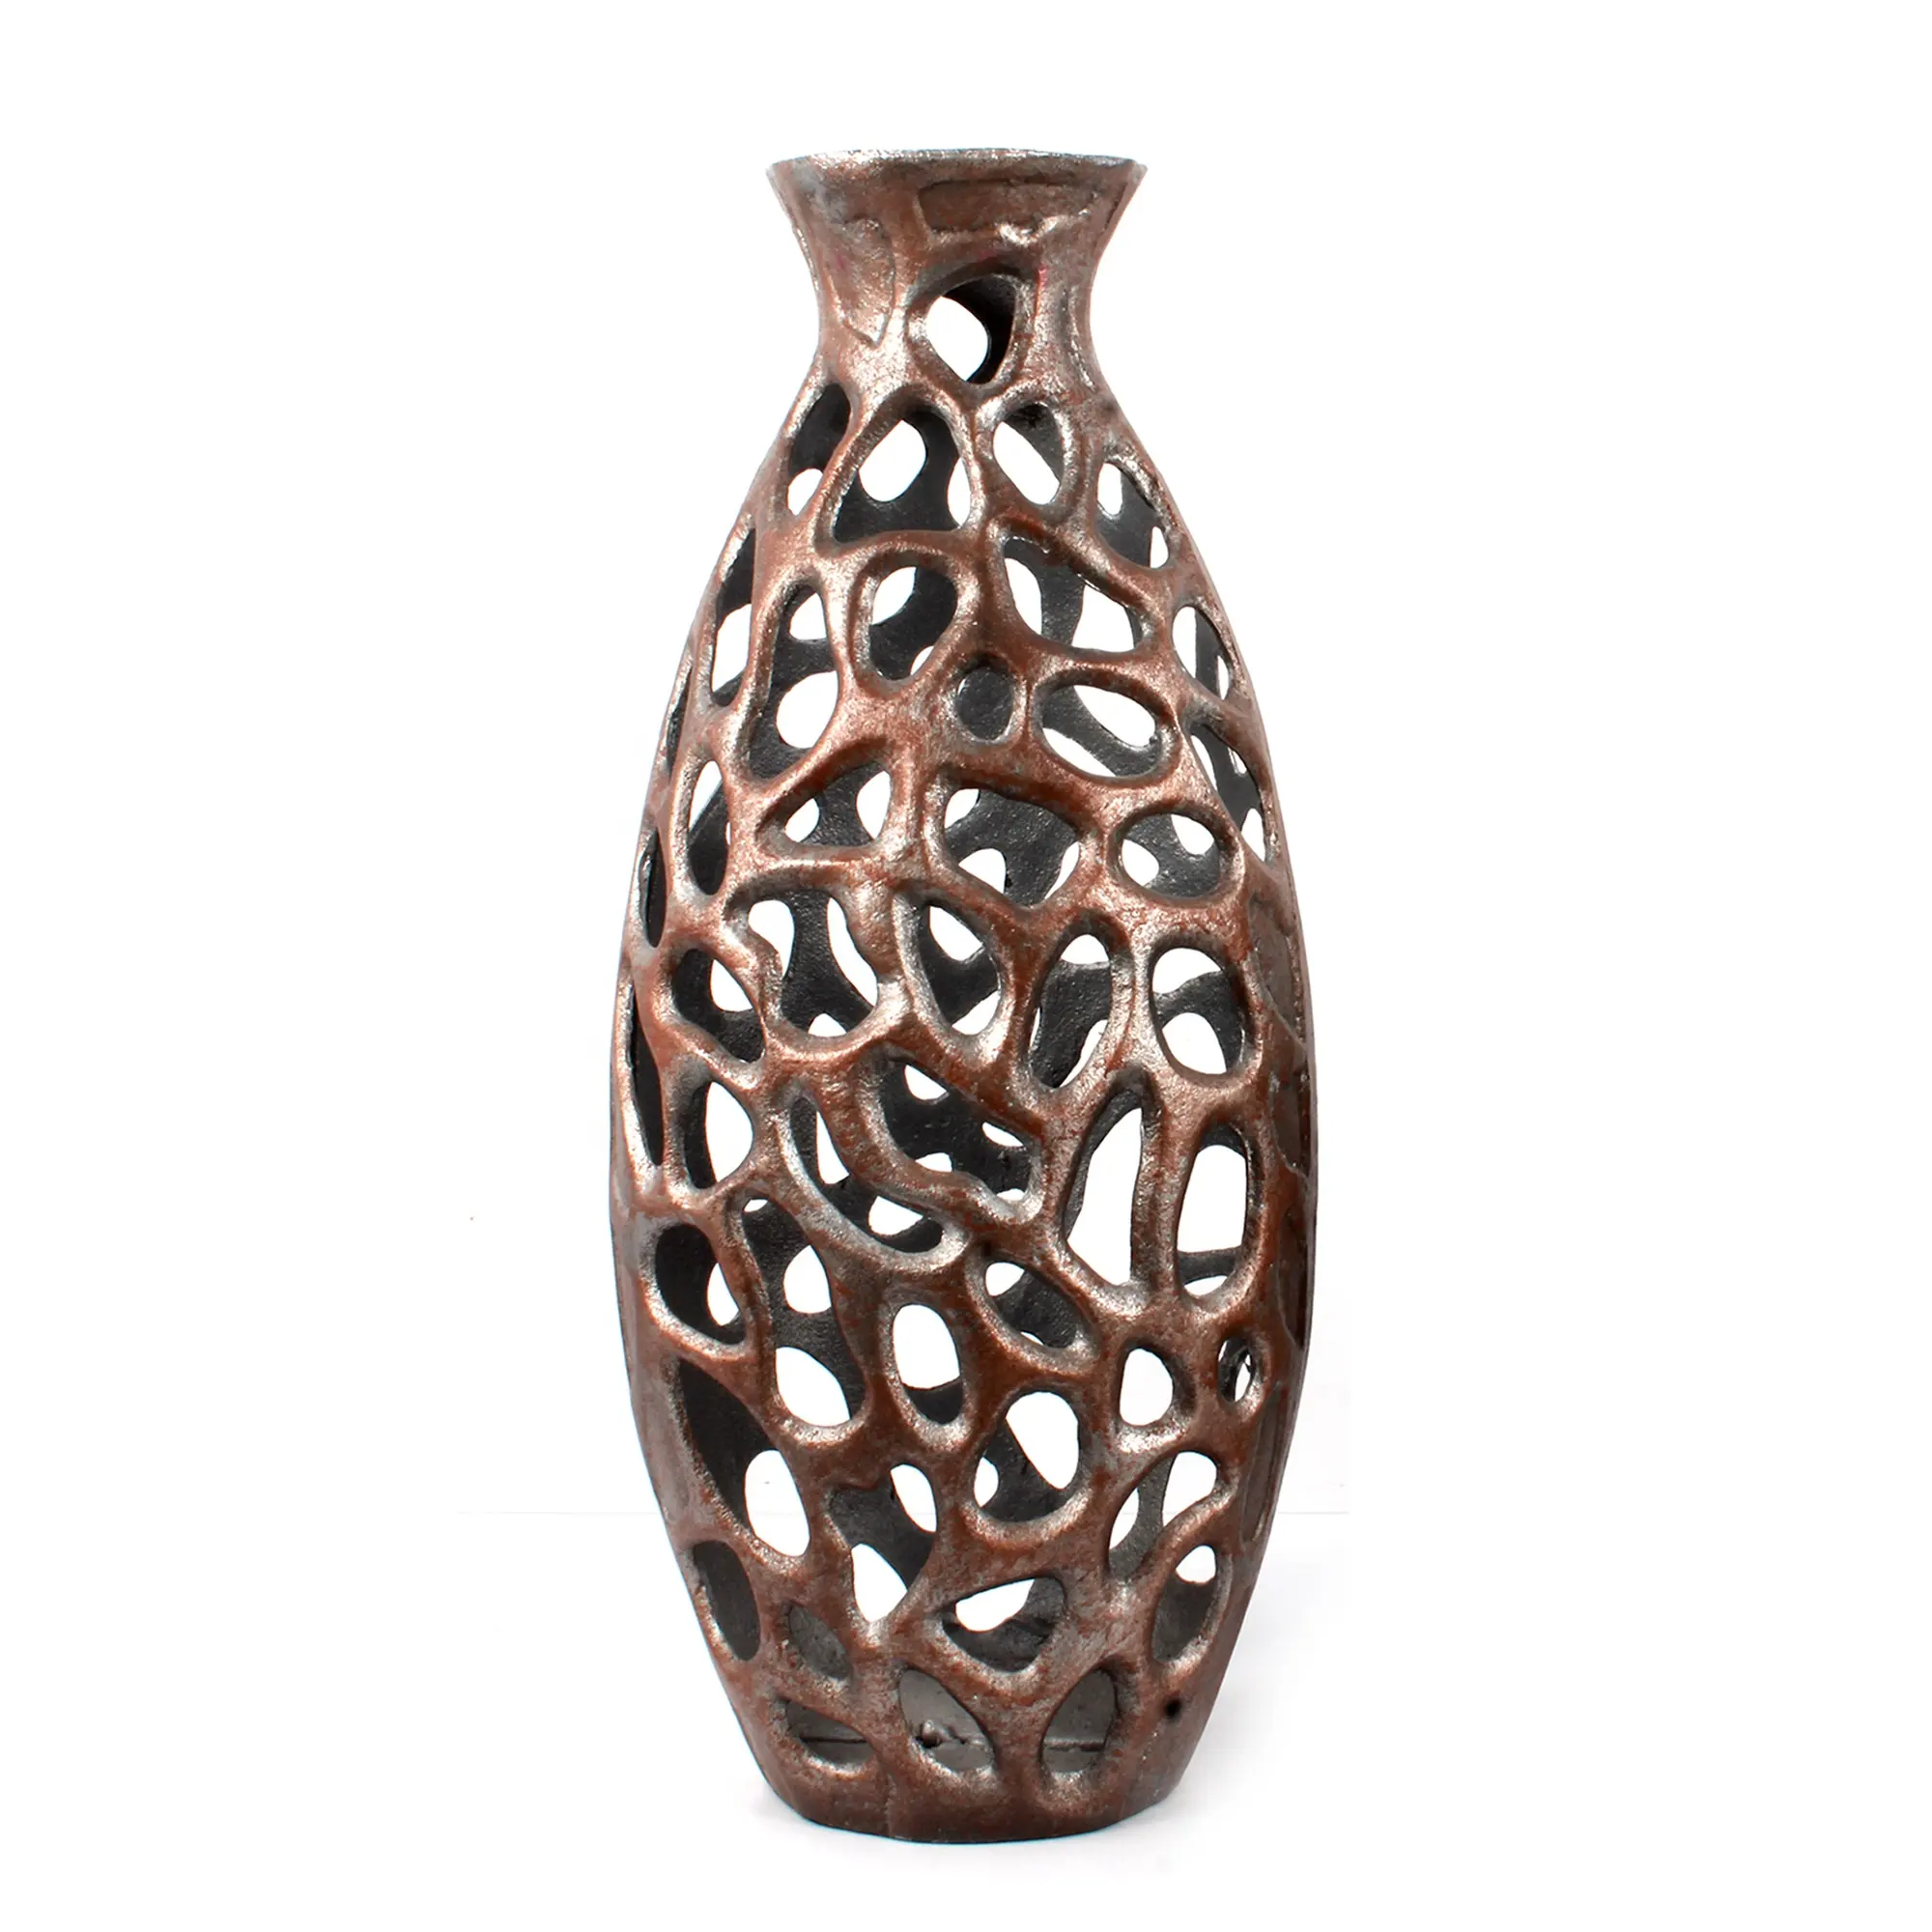 Handmade Cast Aluminium Large Flower Vase With Patina Finishing Custom Made Flower Vase For Sale At Cheap Price